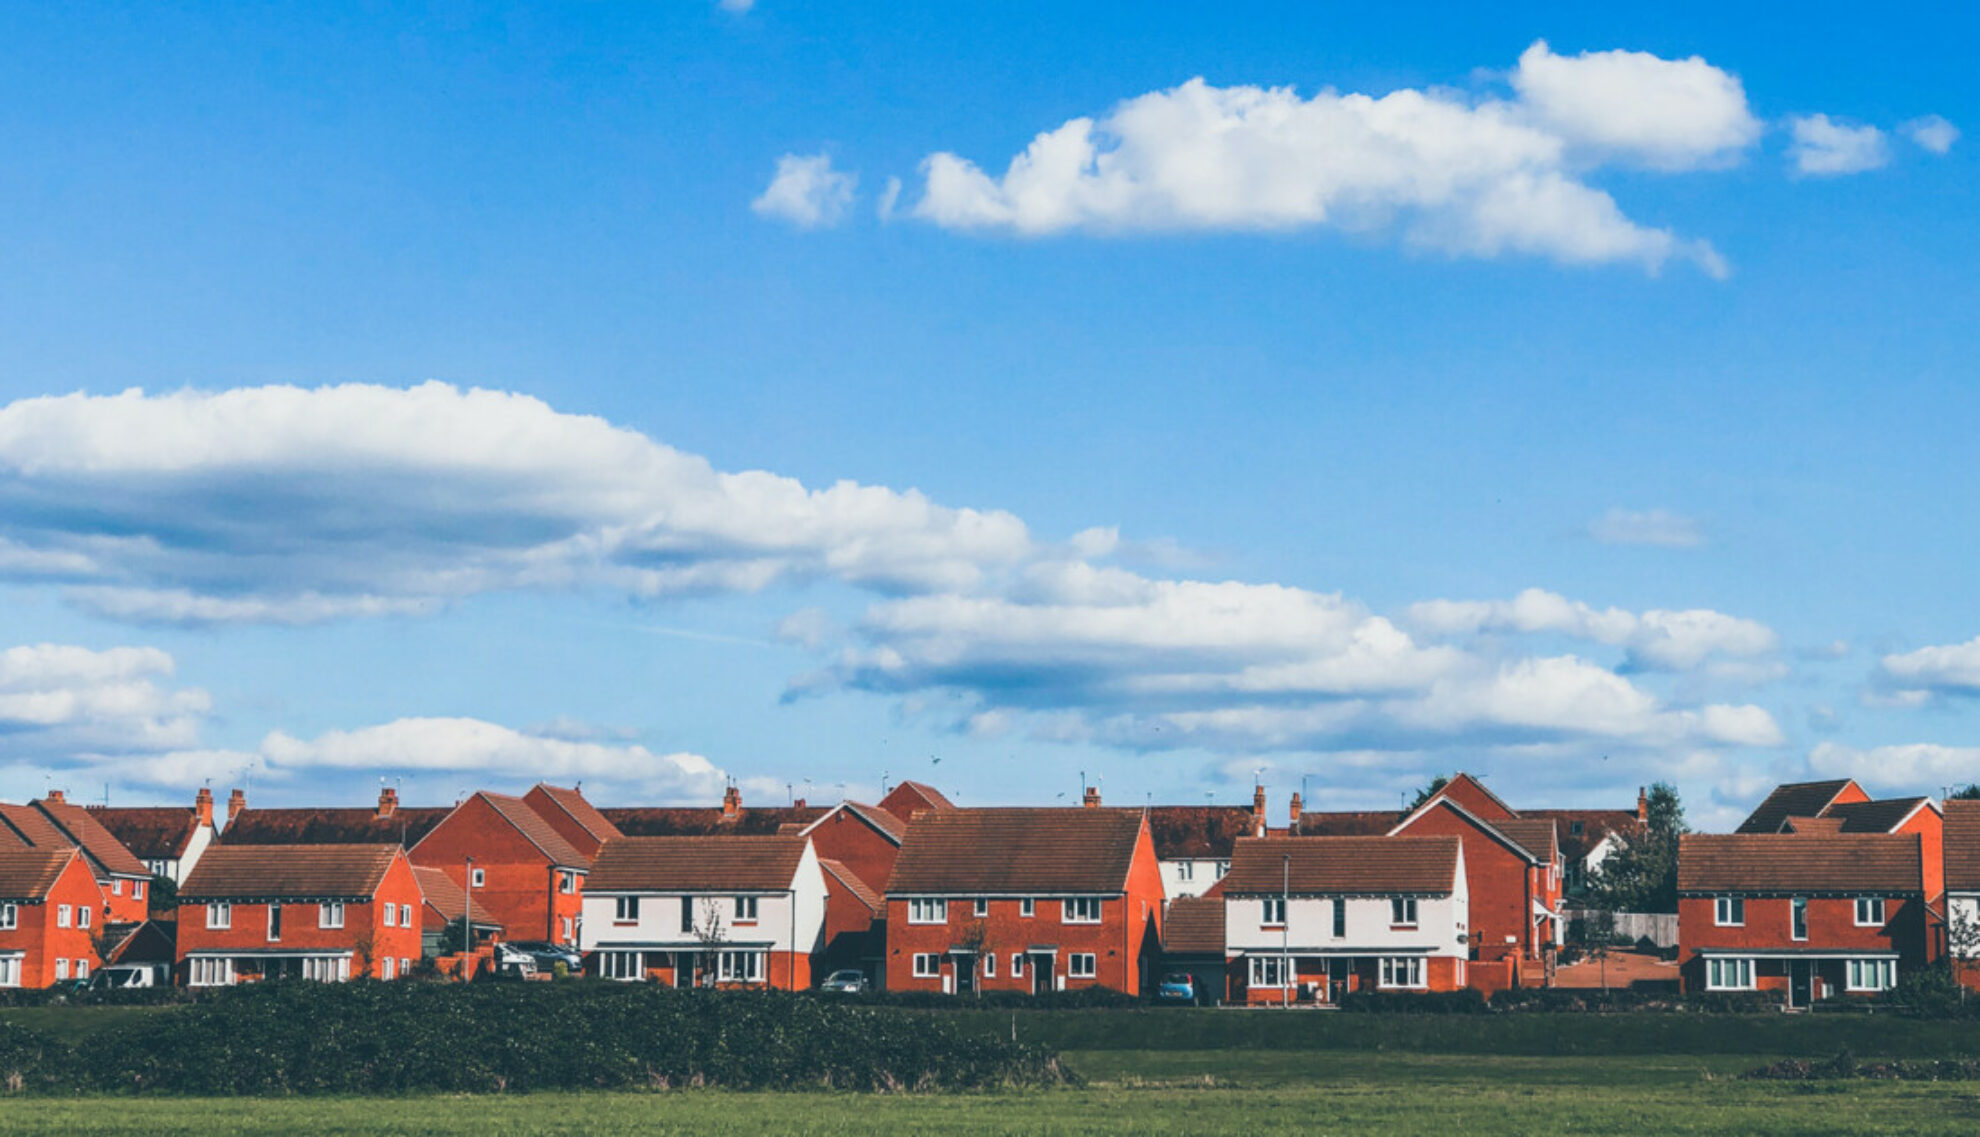 UK new build houses under a blue sky